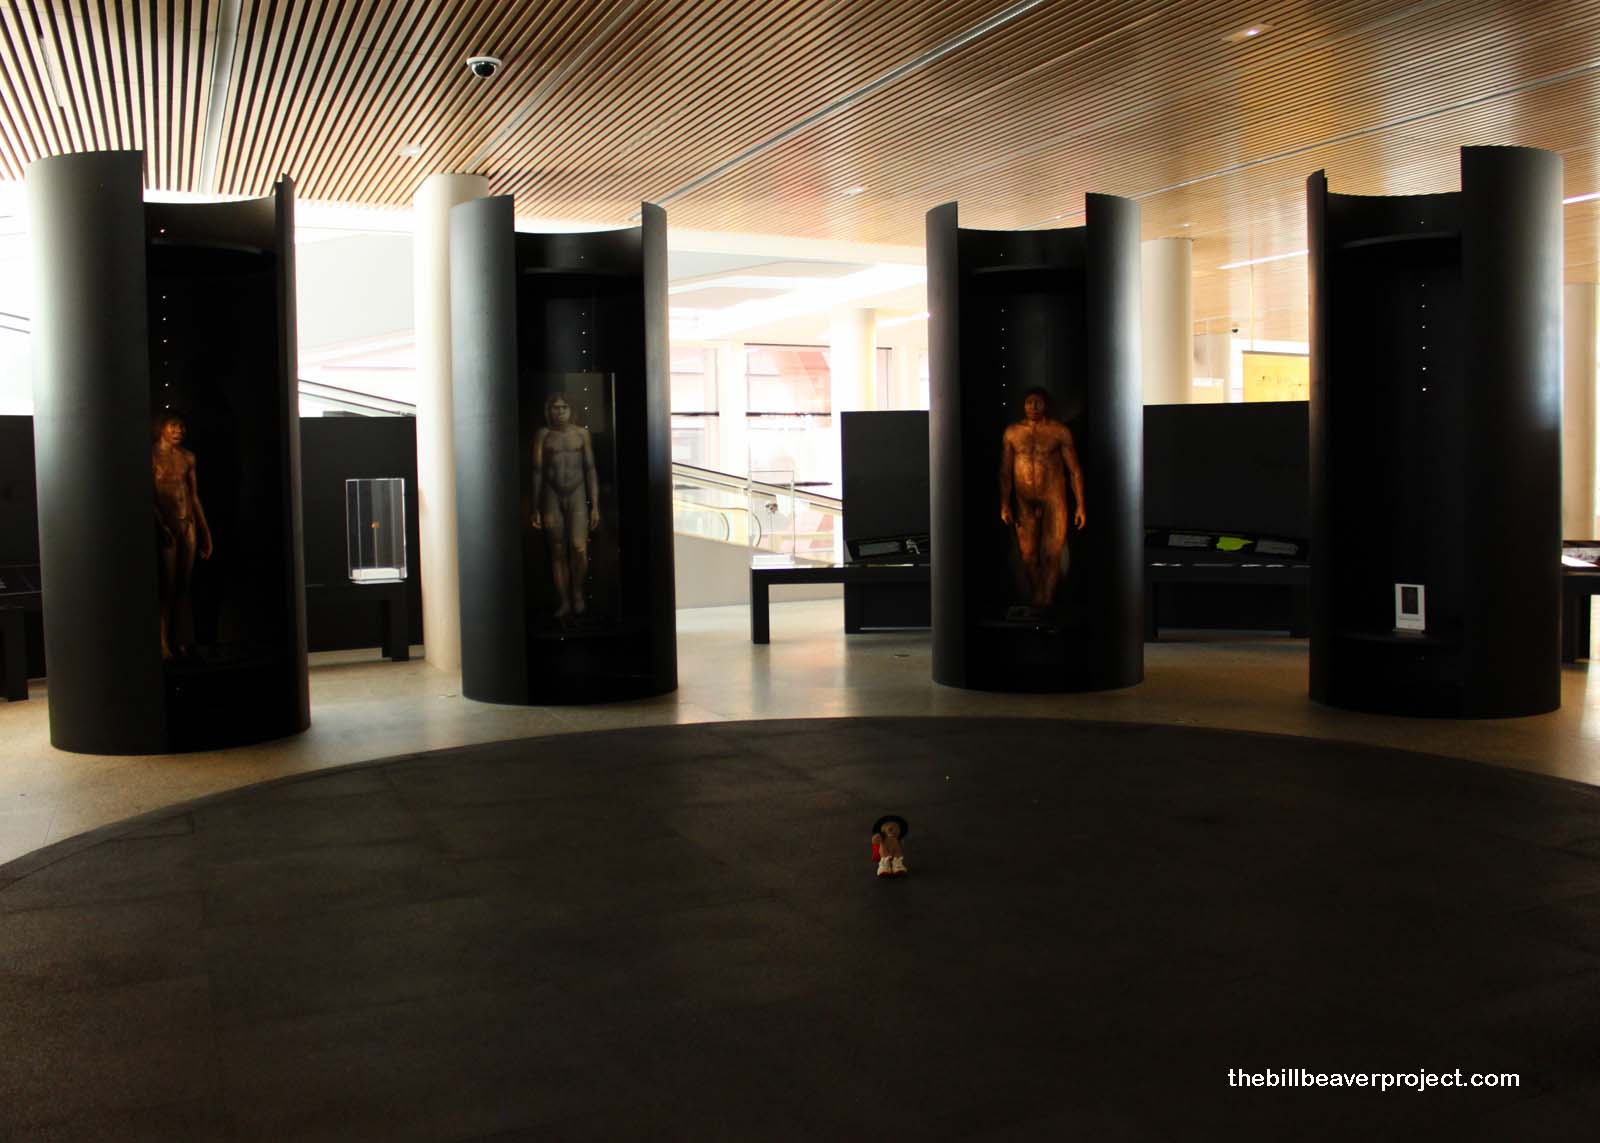 The Human Evolution Museum